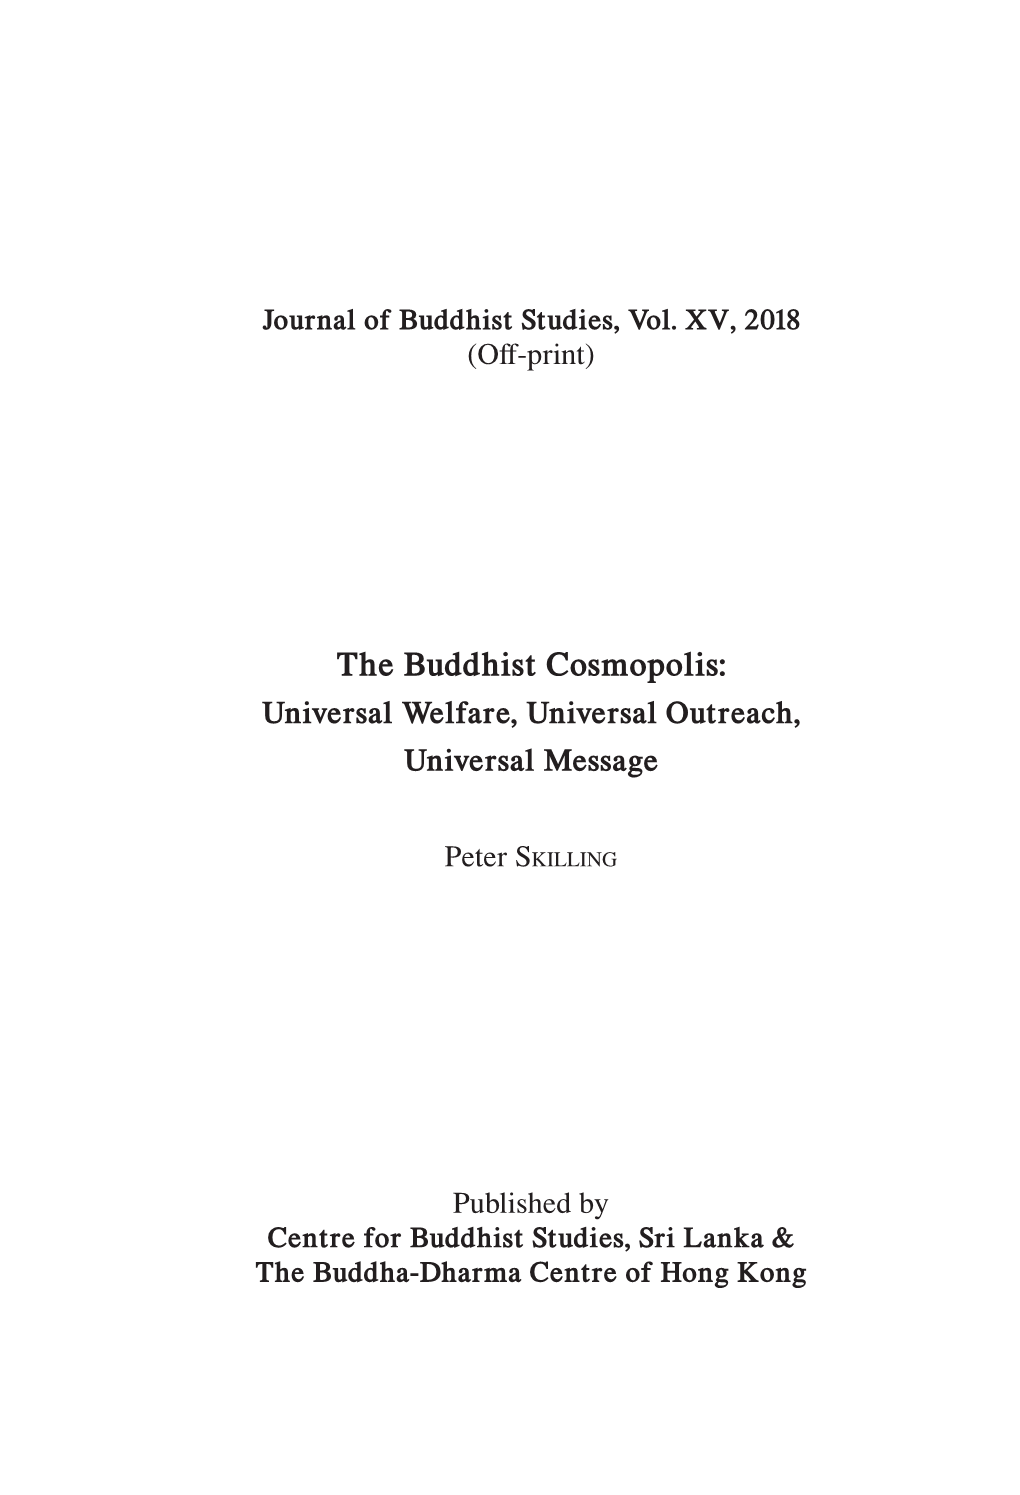 The Buddhist Cosmopolis: Universal Welfare, Universal Outreach, Universal Message